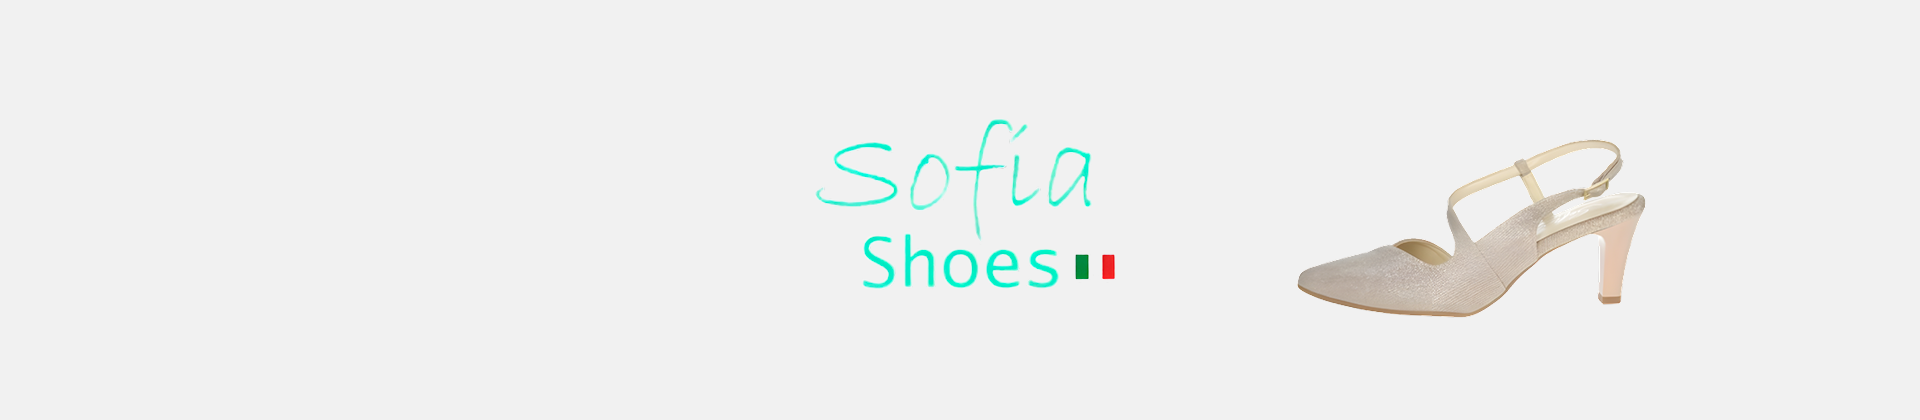 Sofia Shoes | sandali da donna a prezzi accessibili